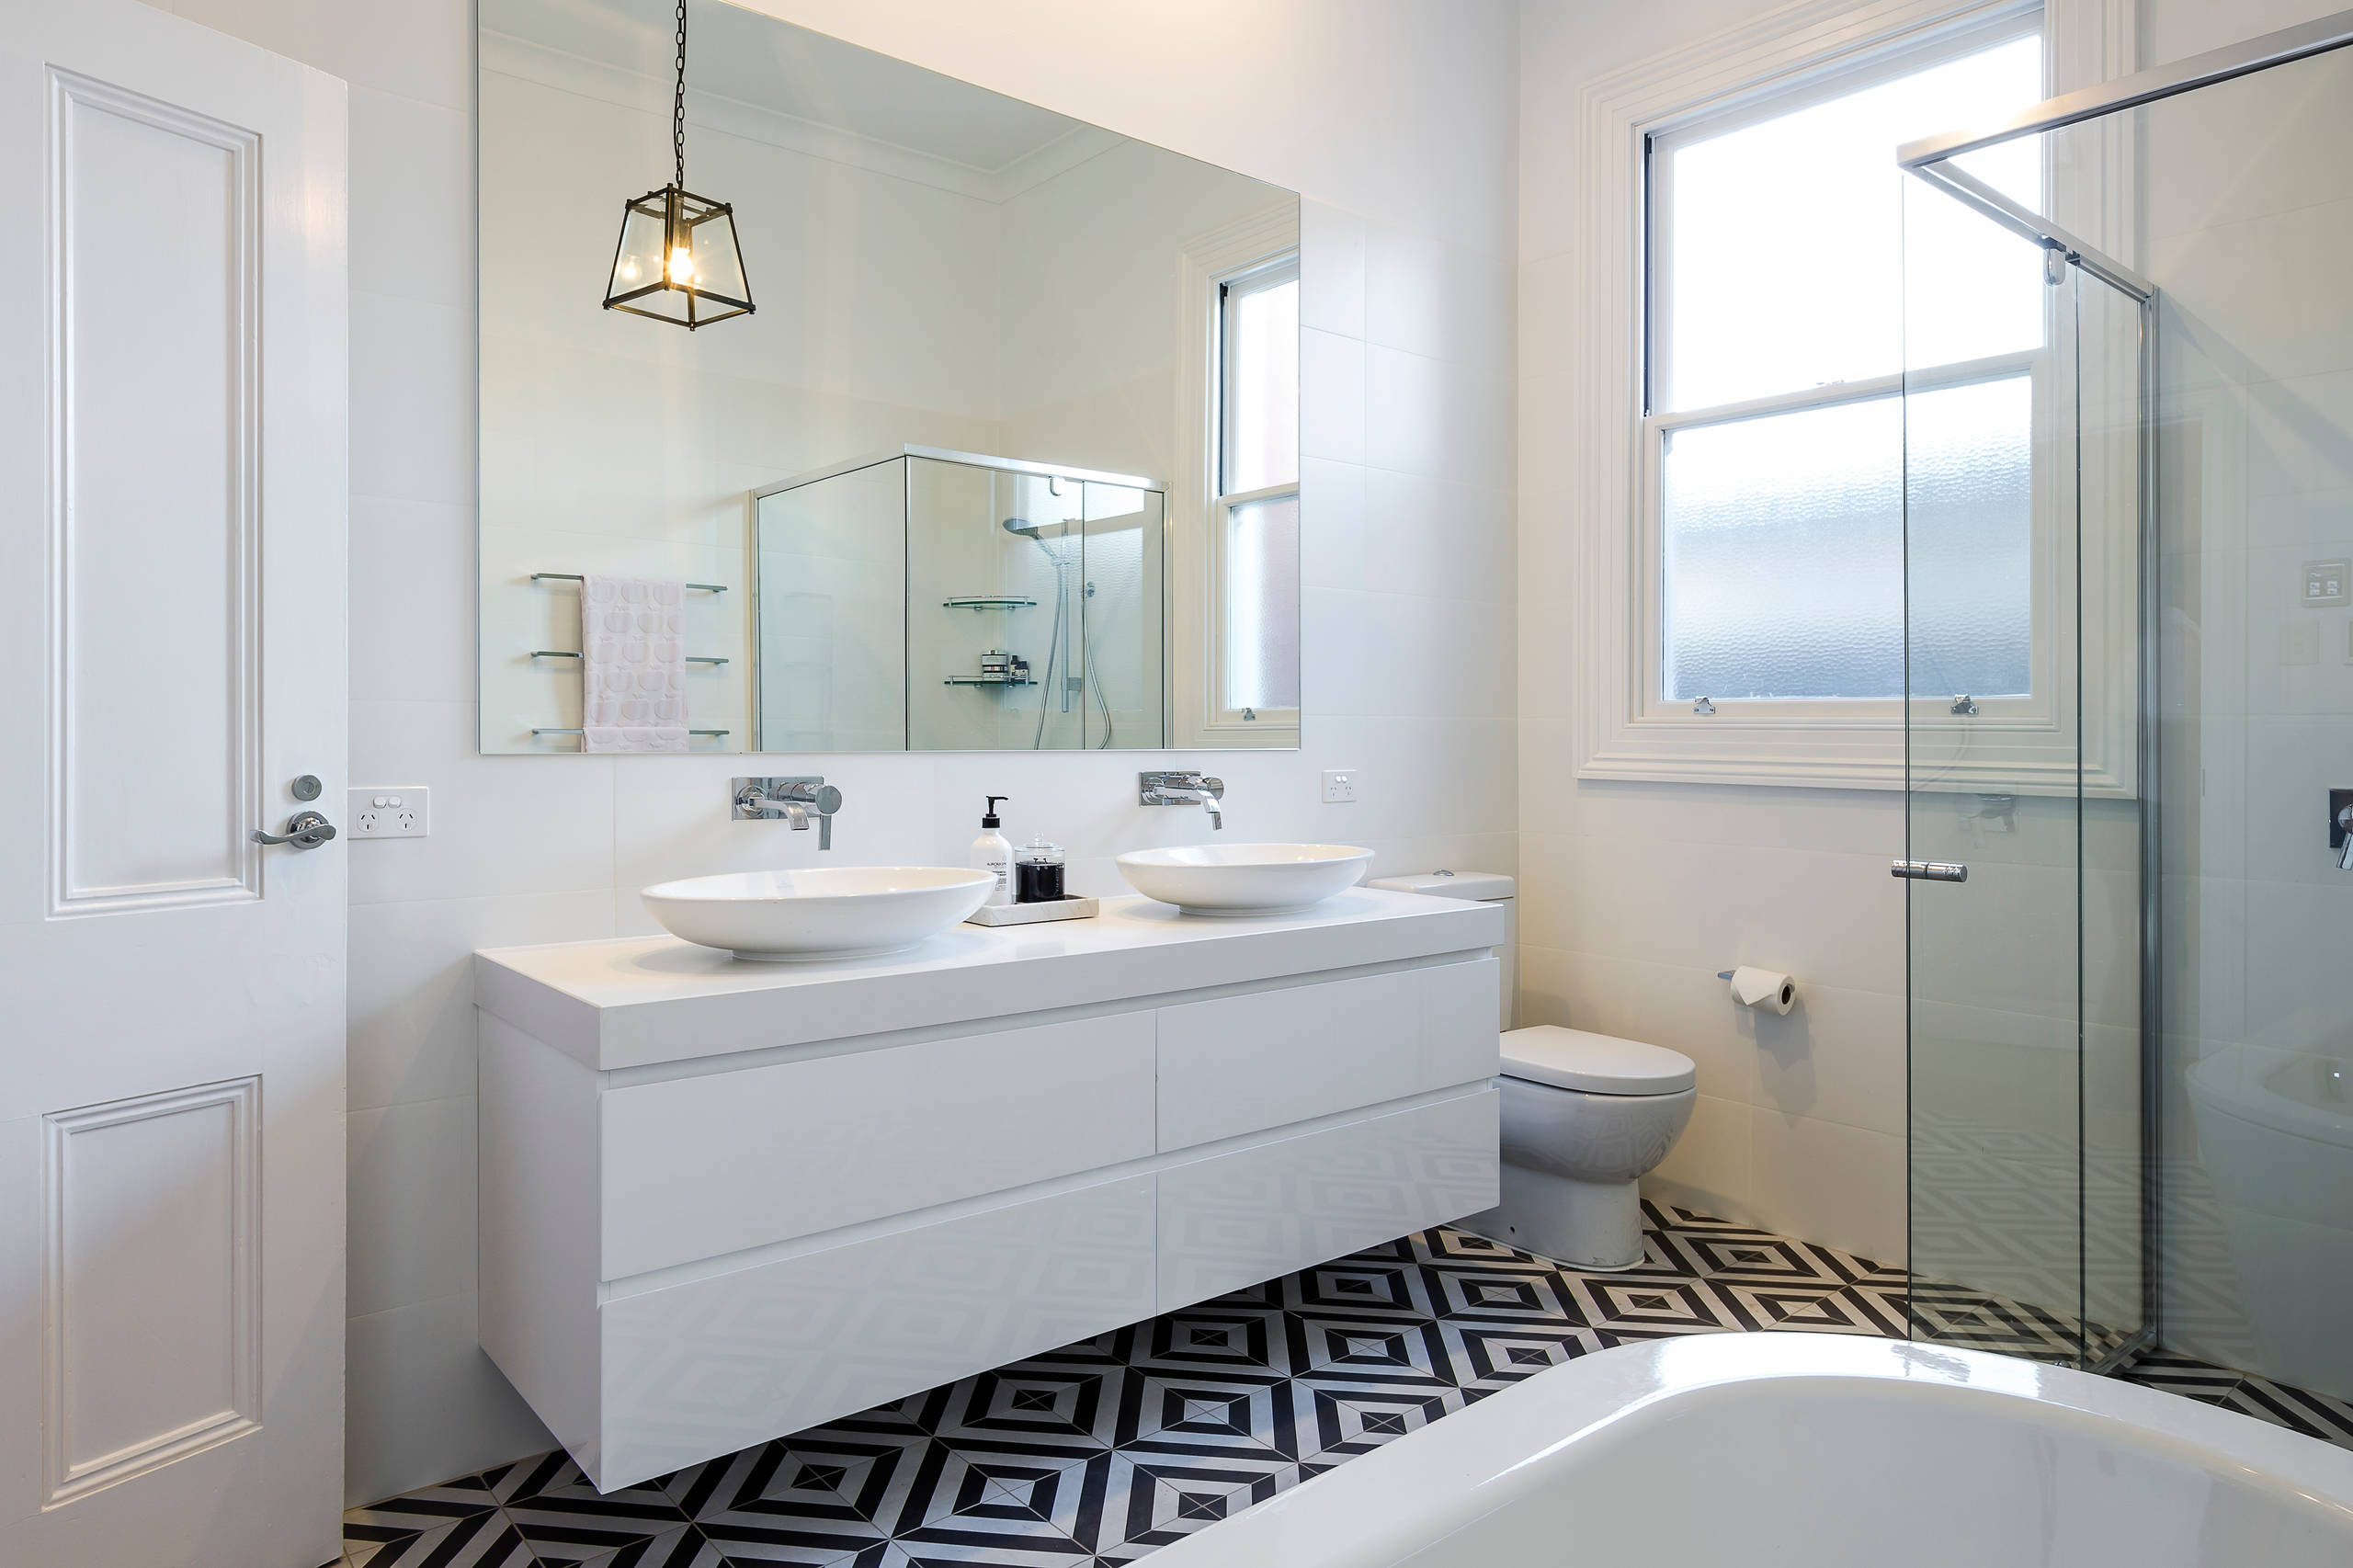 How To Choose A Bathroom Mirror Houzz Uk, Best Bathroom Mirrors Uk